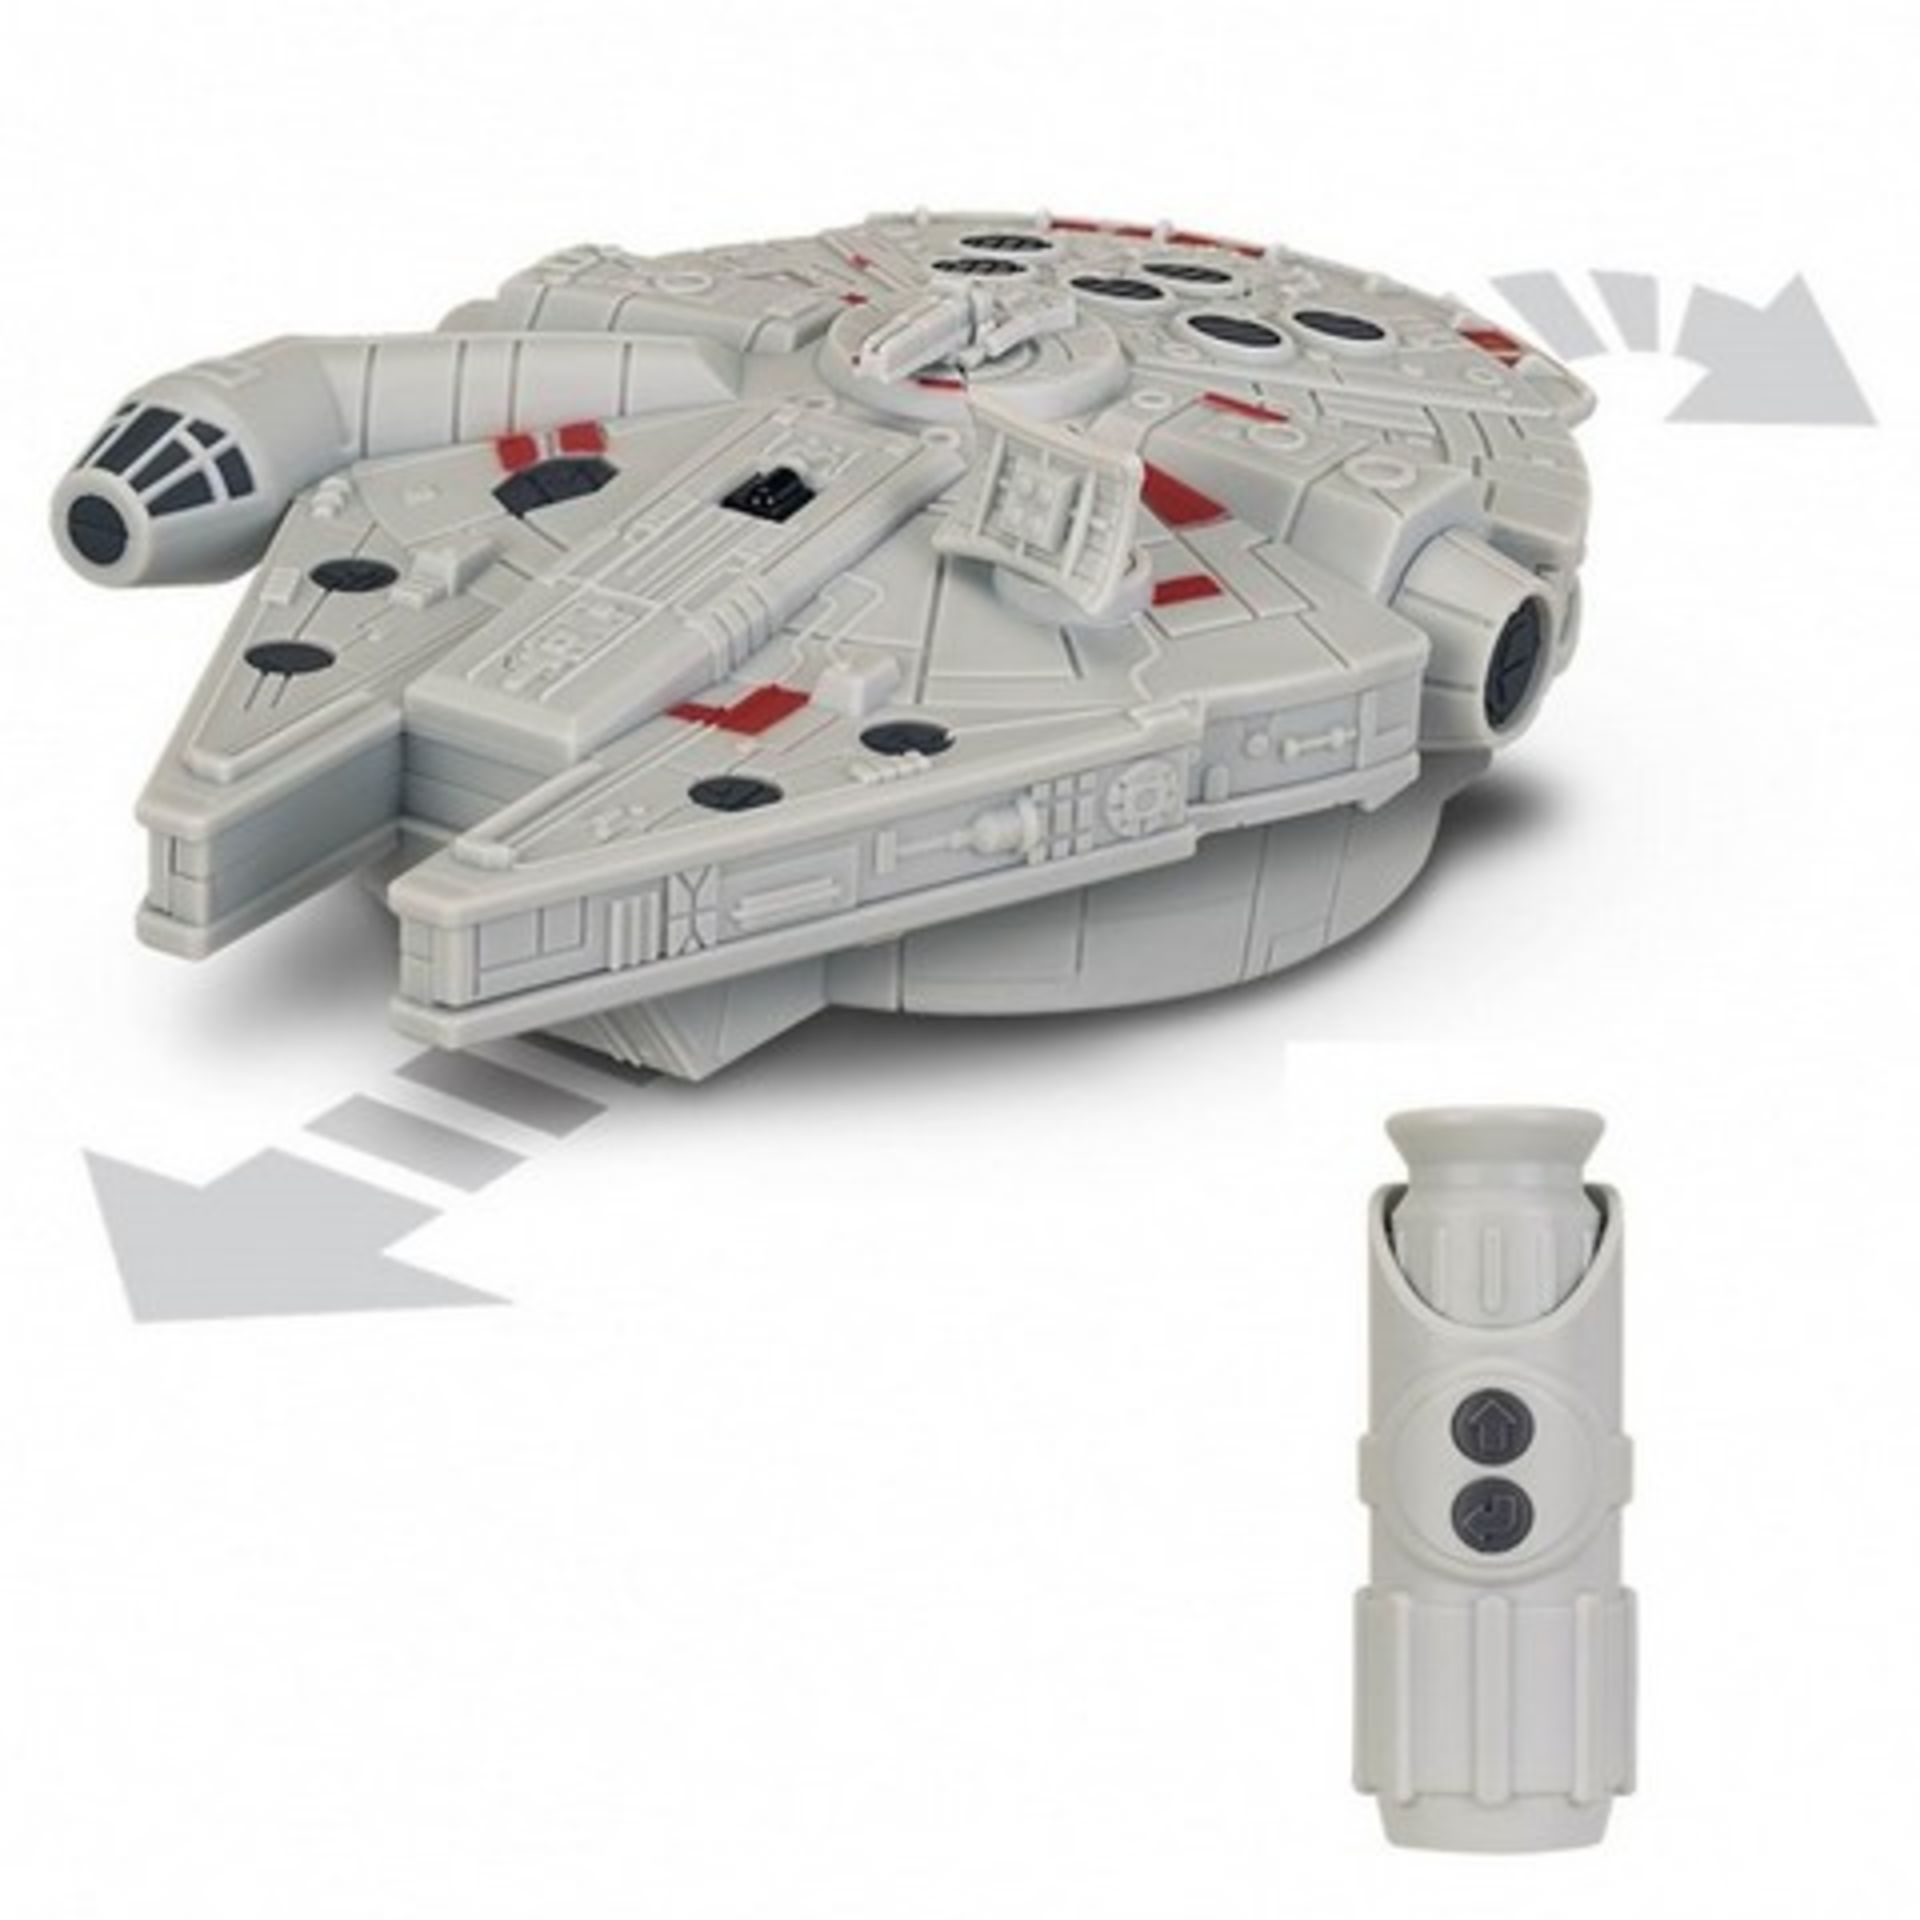 + VAT Brand New Star Wars Millennium Falcon Remote Control Vehicle Amazon Price £23.91 - Image 2 of 2